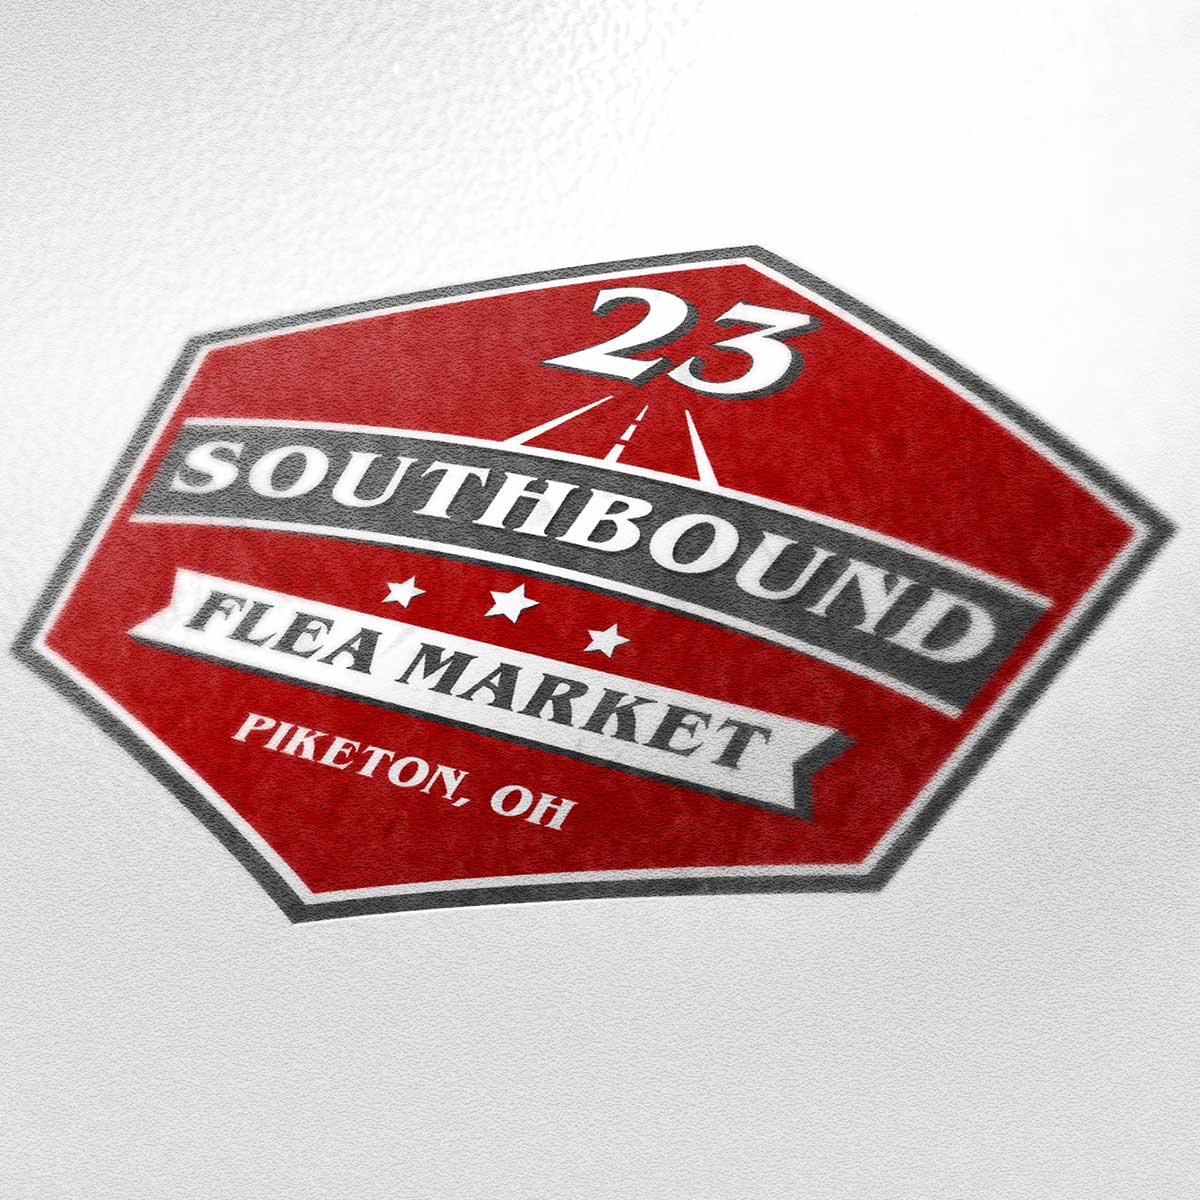 23 Southbound Logo